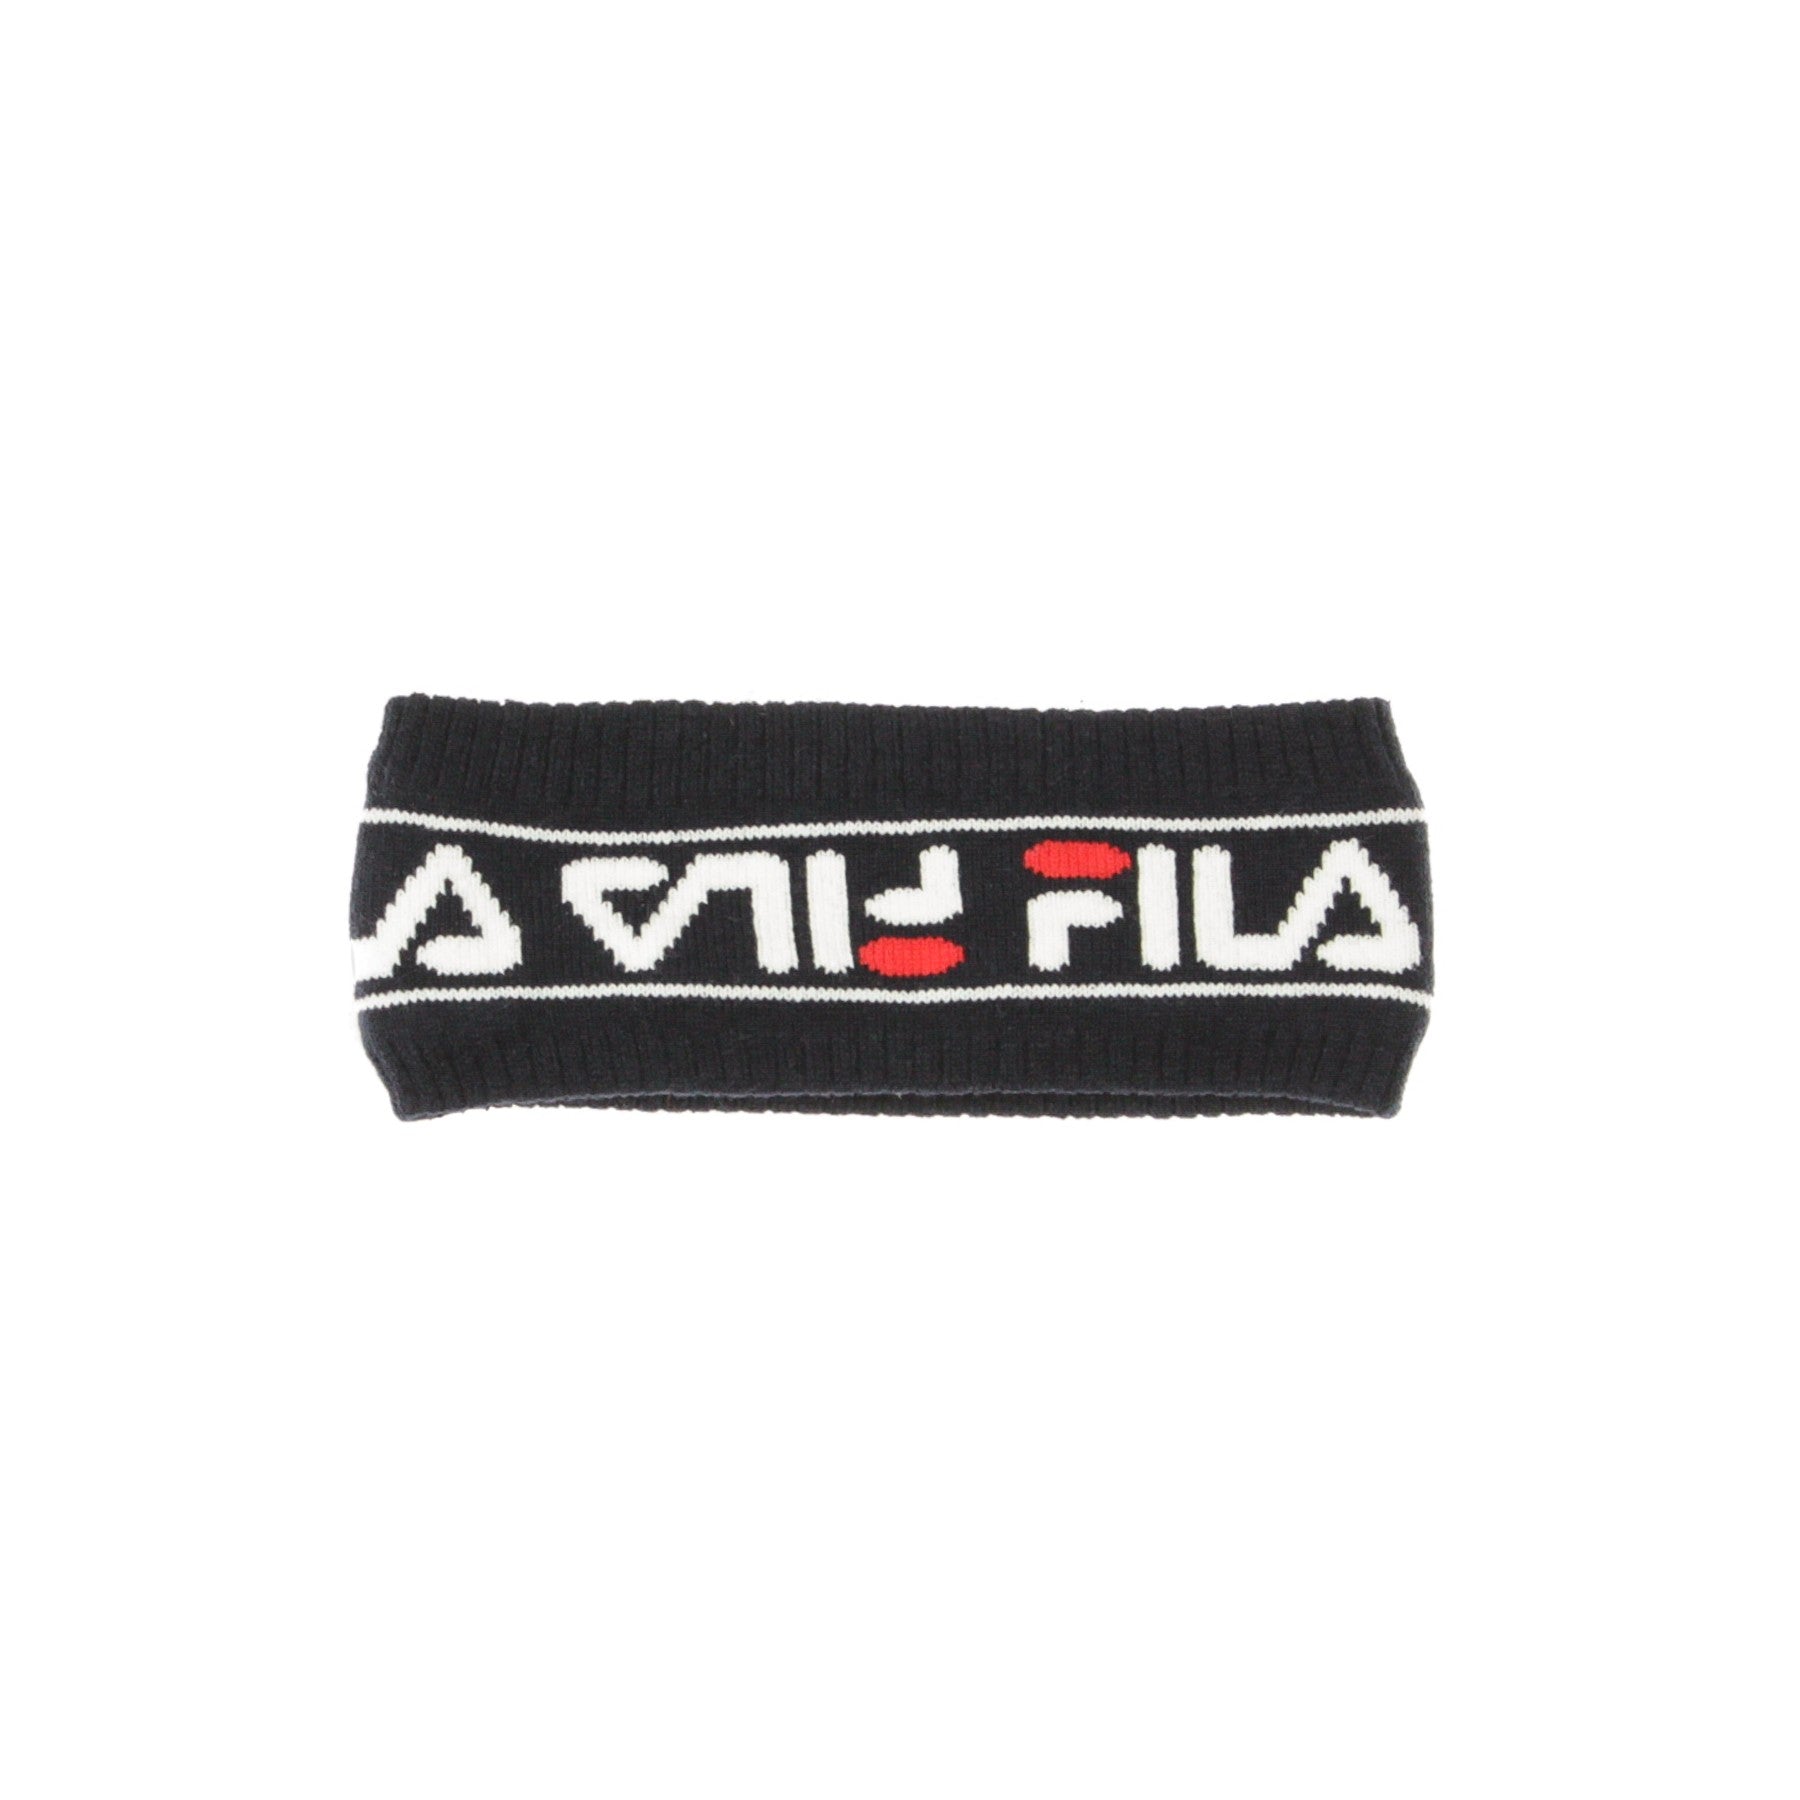 Fila, Fascetta Uomo Intarsia Knitted Headband, Black Iris/true Red/bright White